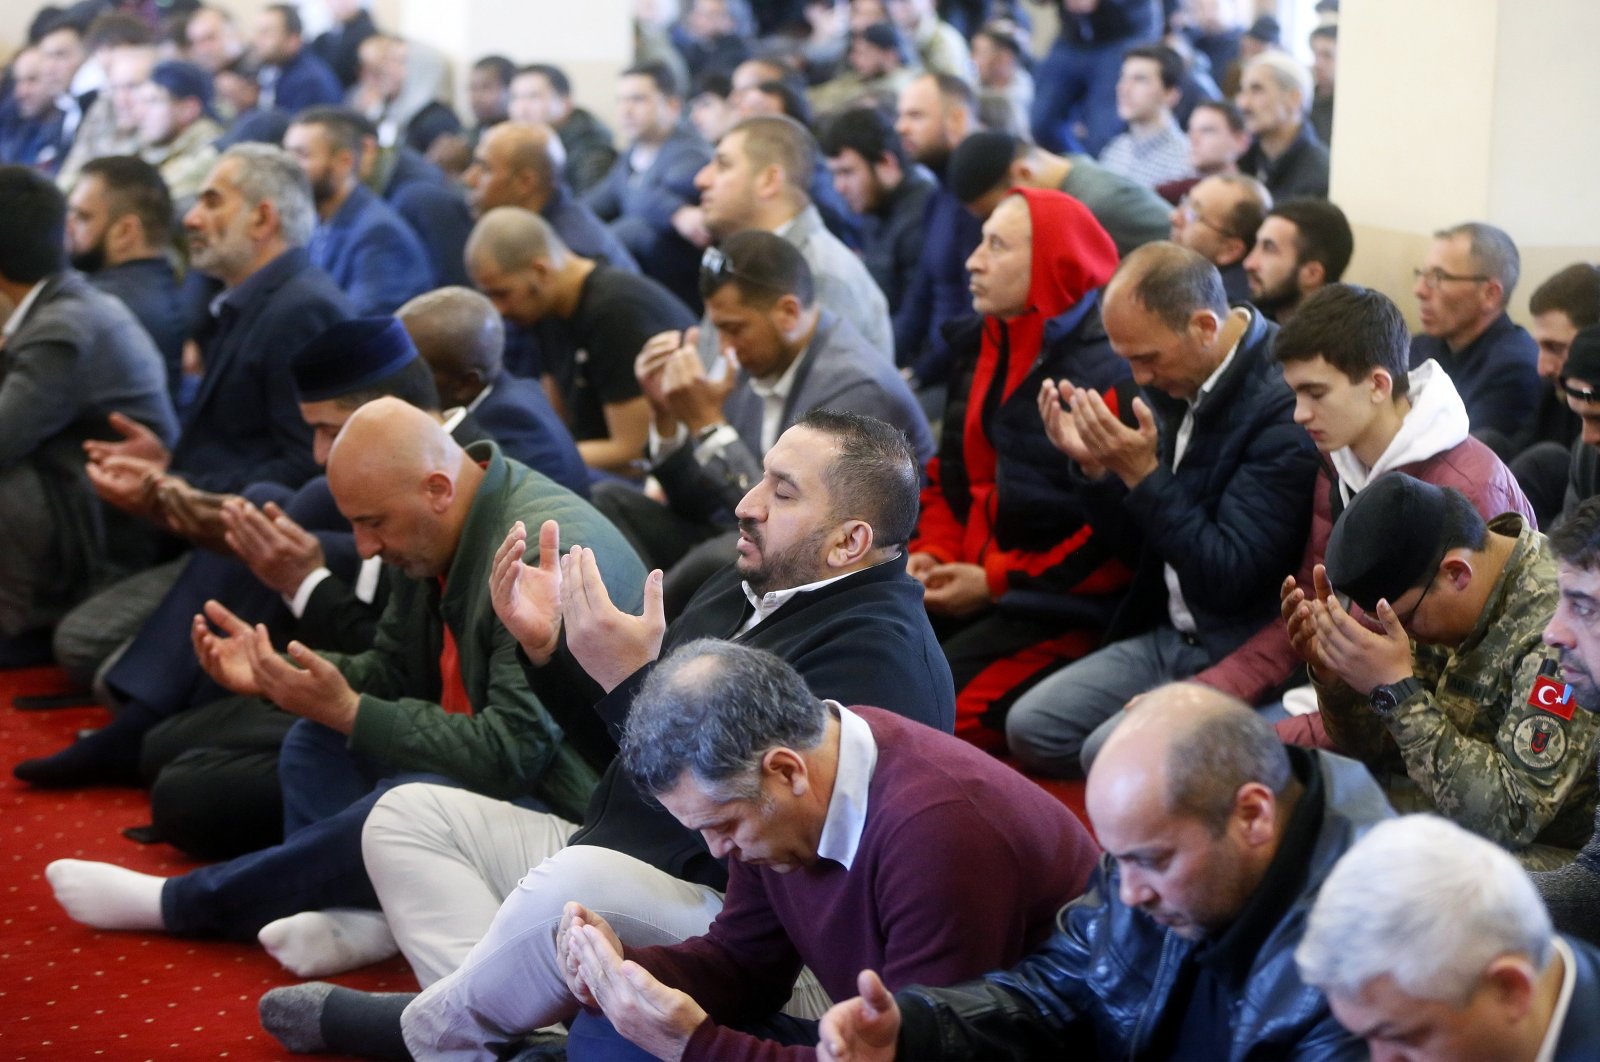 Muslims attend the Eid al-Fitr morning prayer at the Islamic Culture Center Mosque in Kyiv (Kiev), Ukraine, May 2, 2022. (EPA Photo)